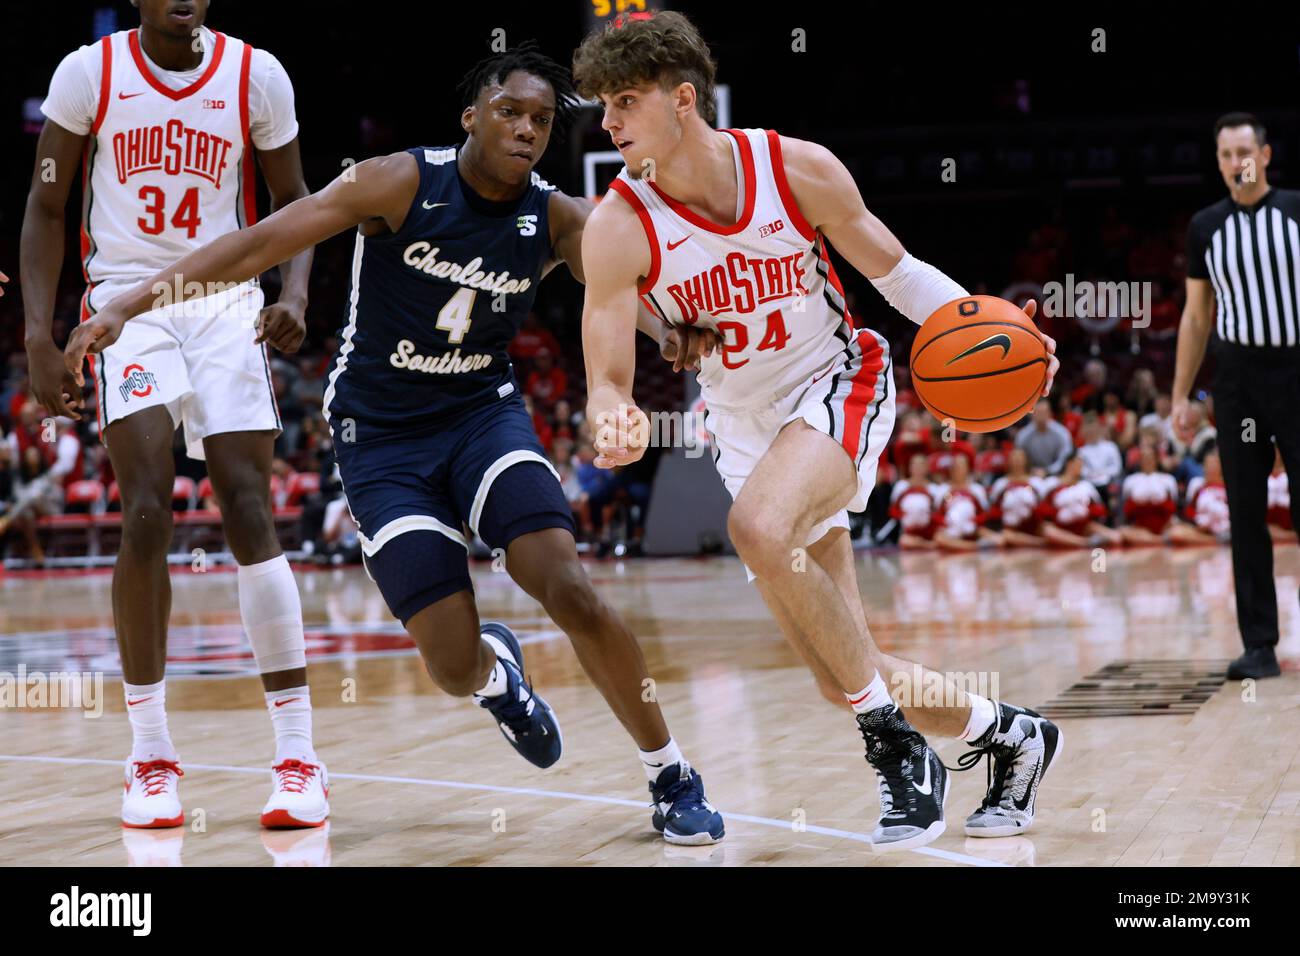 Ohio State men's basketball player preview: Kalen Etzler - Land